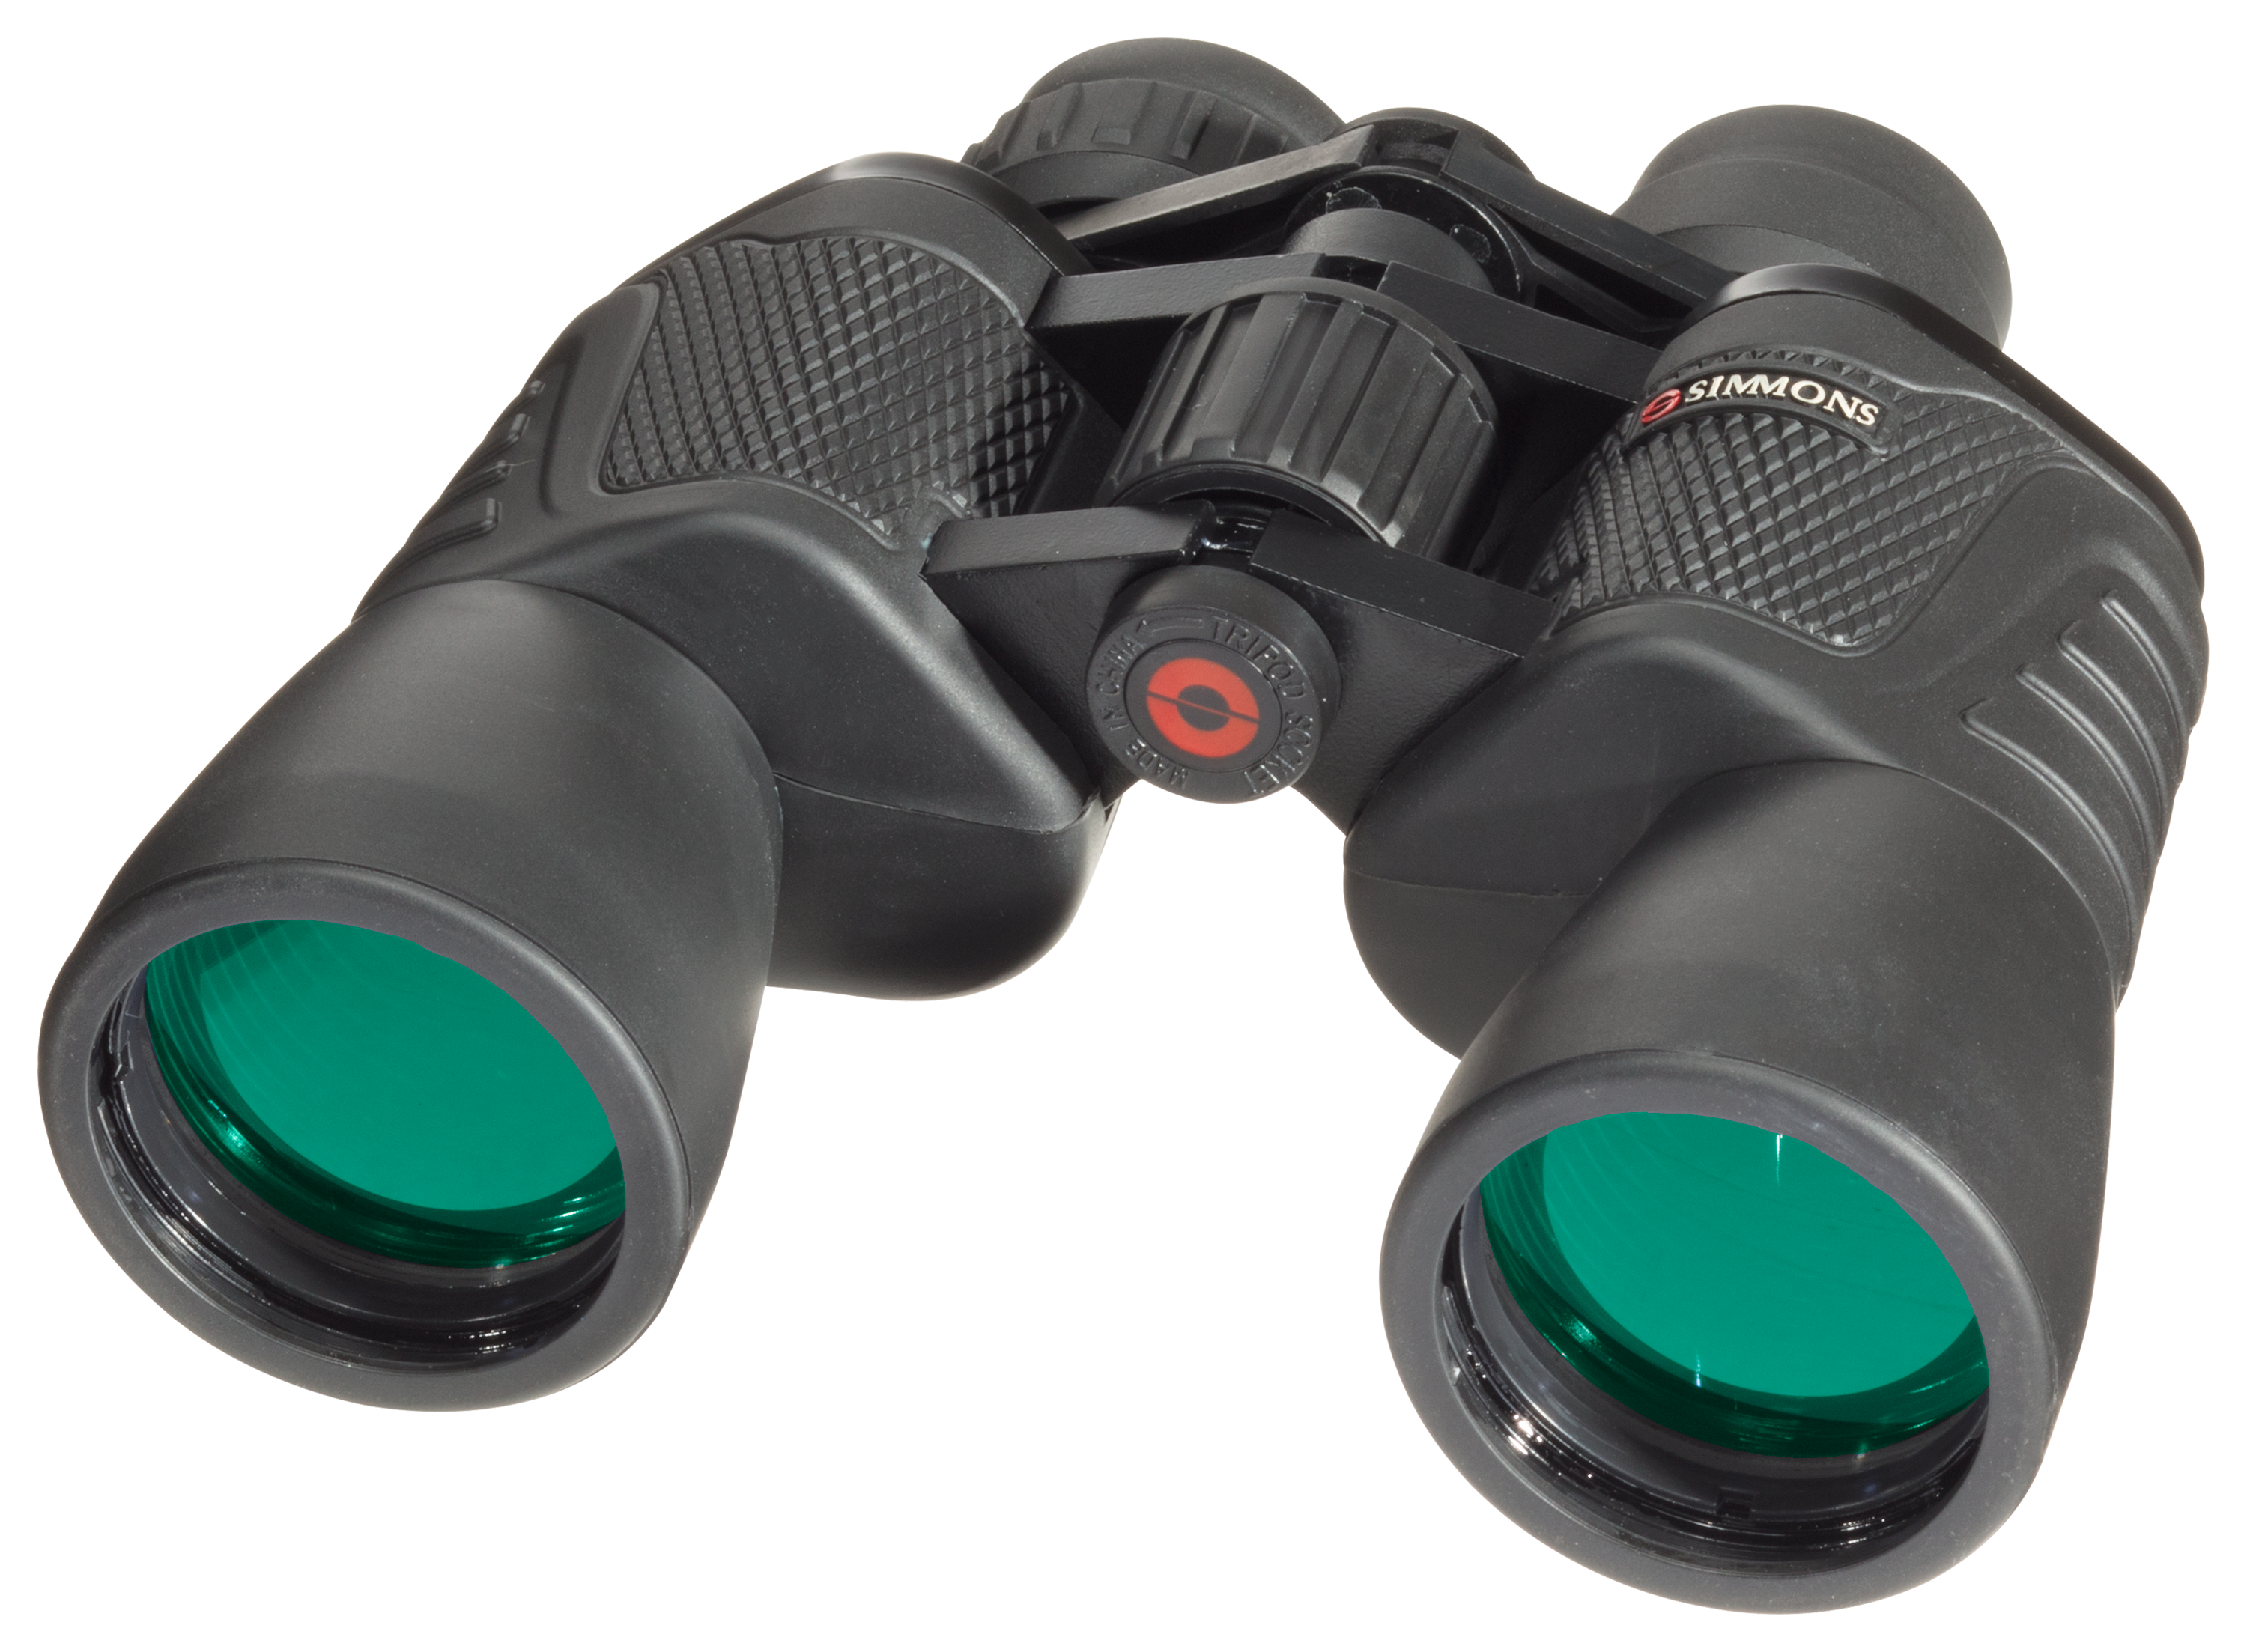 Simmons ProSport Binoculars - 10X